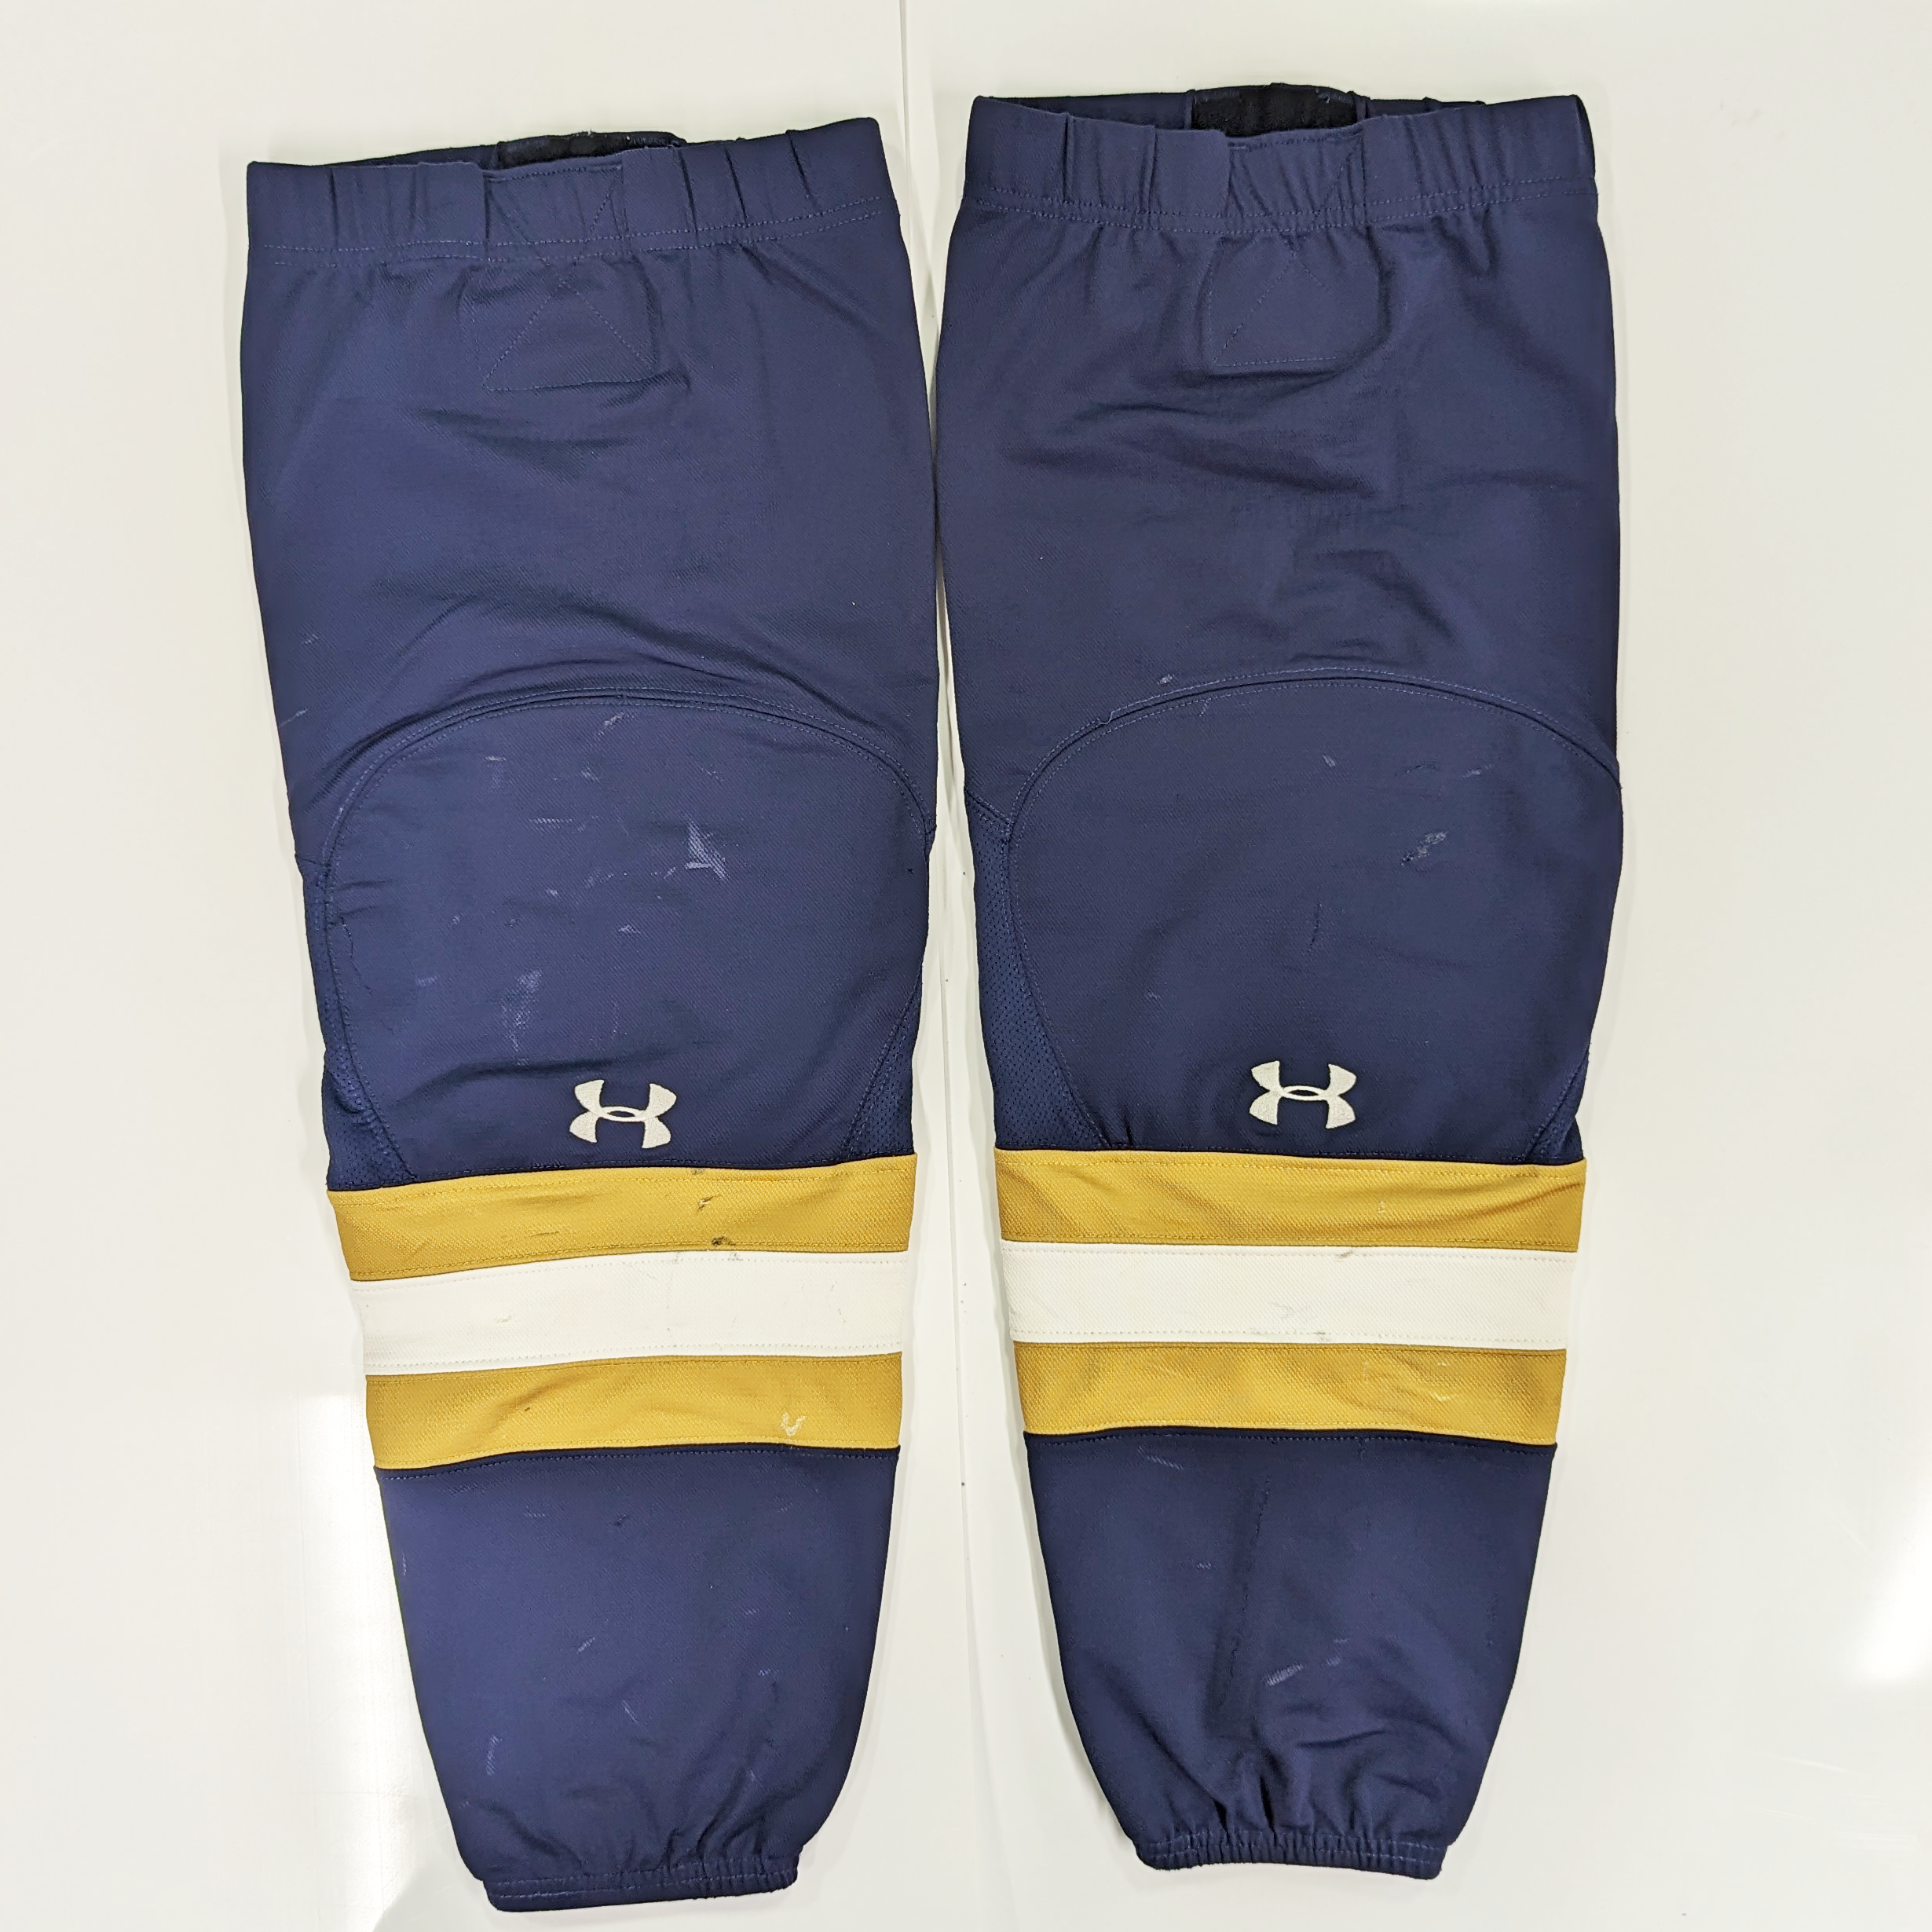 NCAA - Used Under Armour Hockey Socks (Blue/White/Red